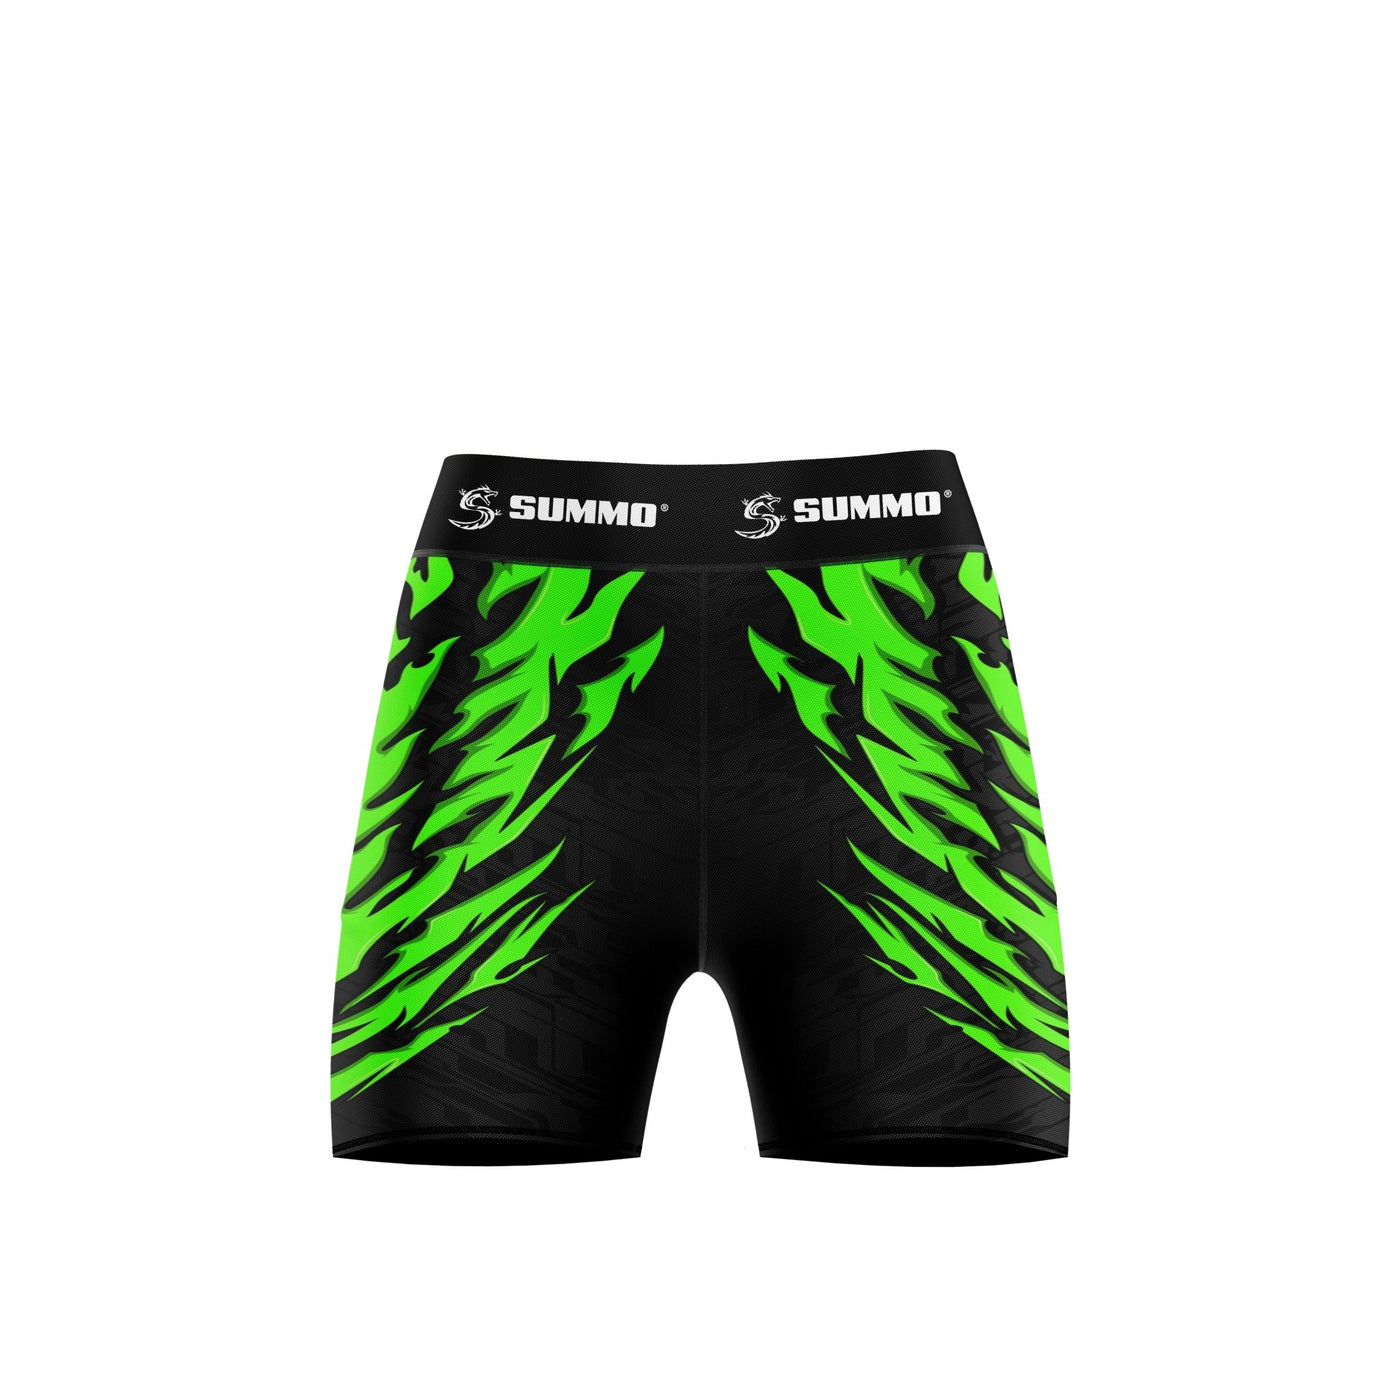 Summo Inferno Compression Shorts - Summo Sports